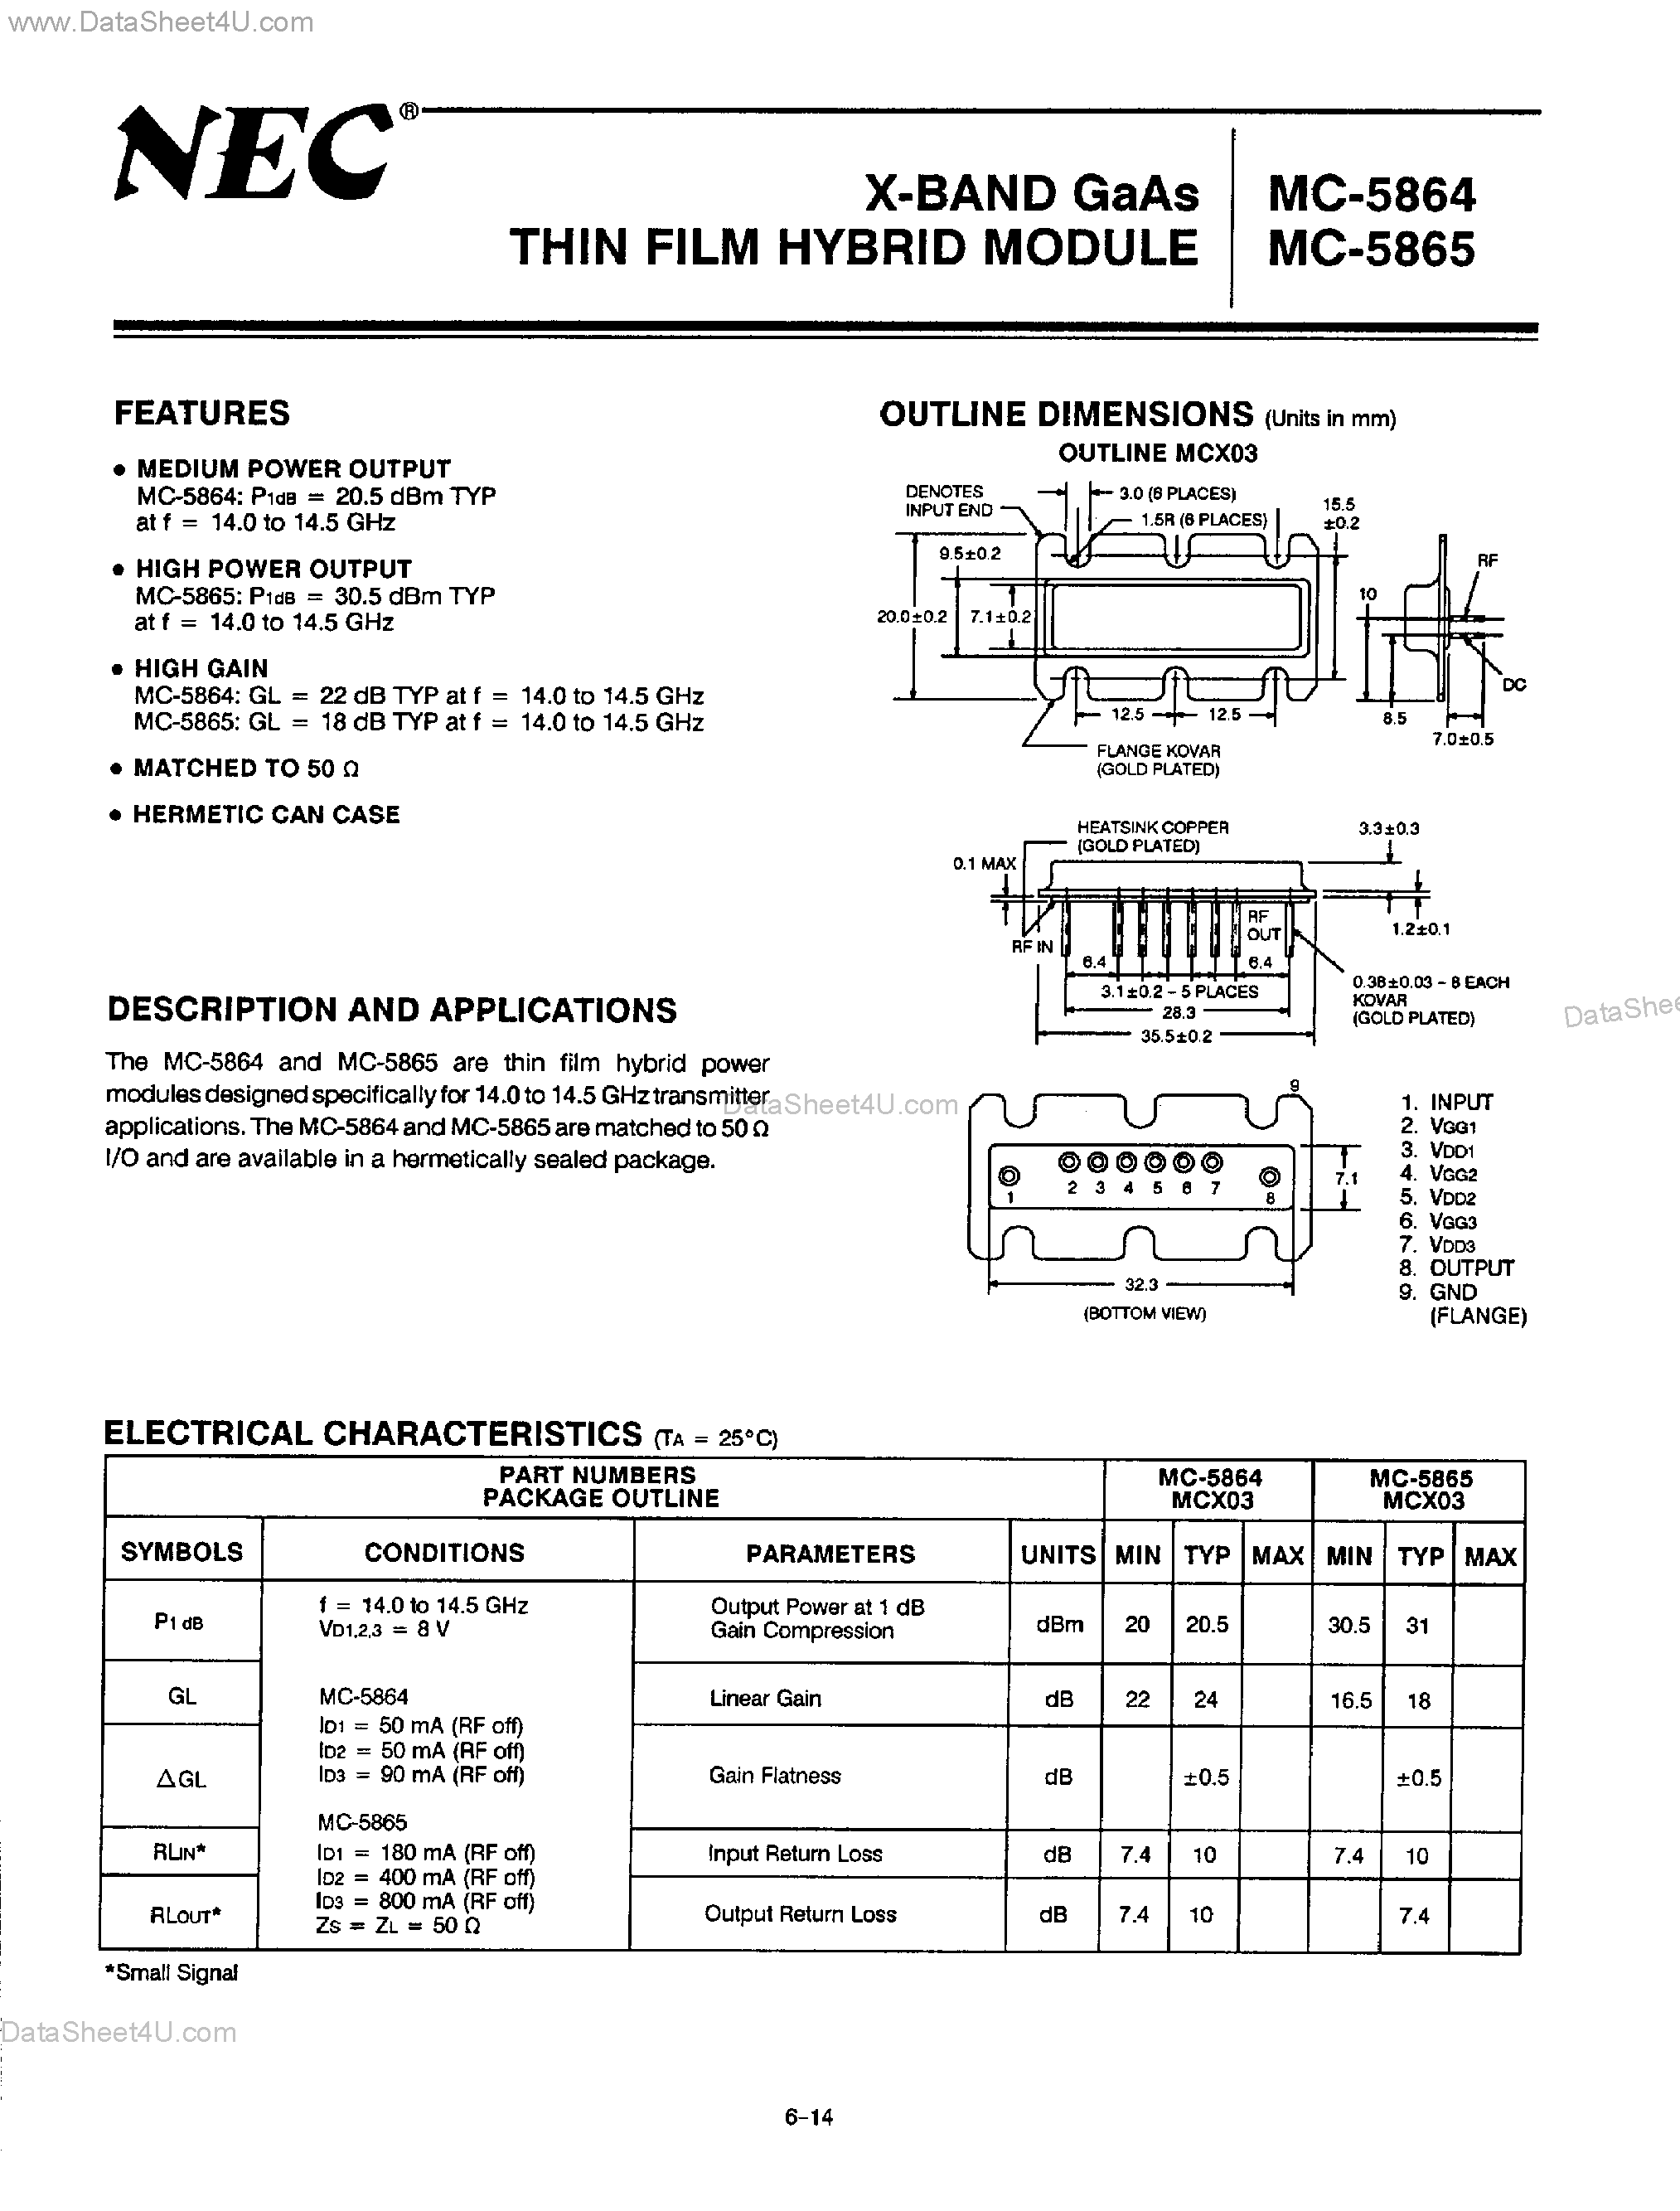 Даташит MC5865 - X-Band GaAs Thin Film Hybrid Module страница 1